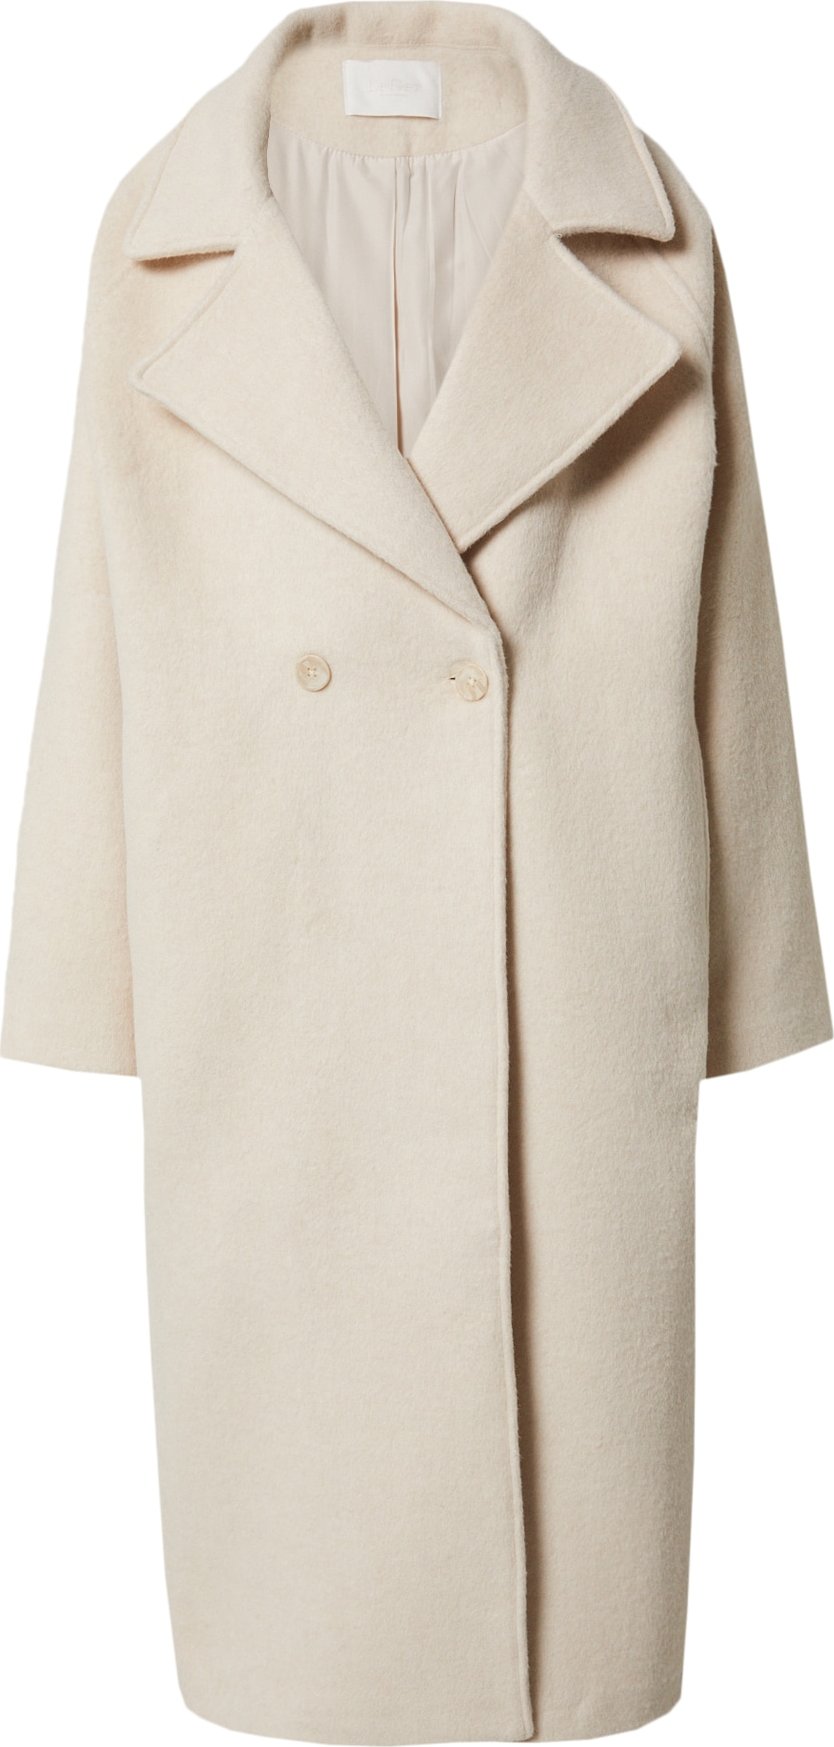 LeGer Premium Přechodný kabát 'Colleen' offwhite